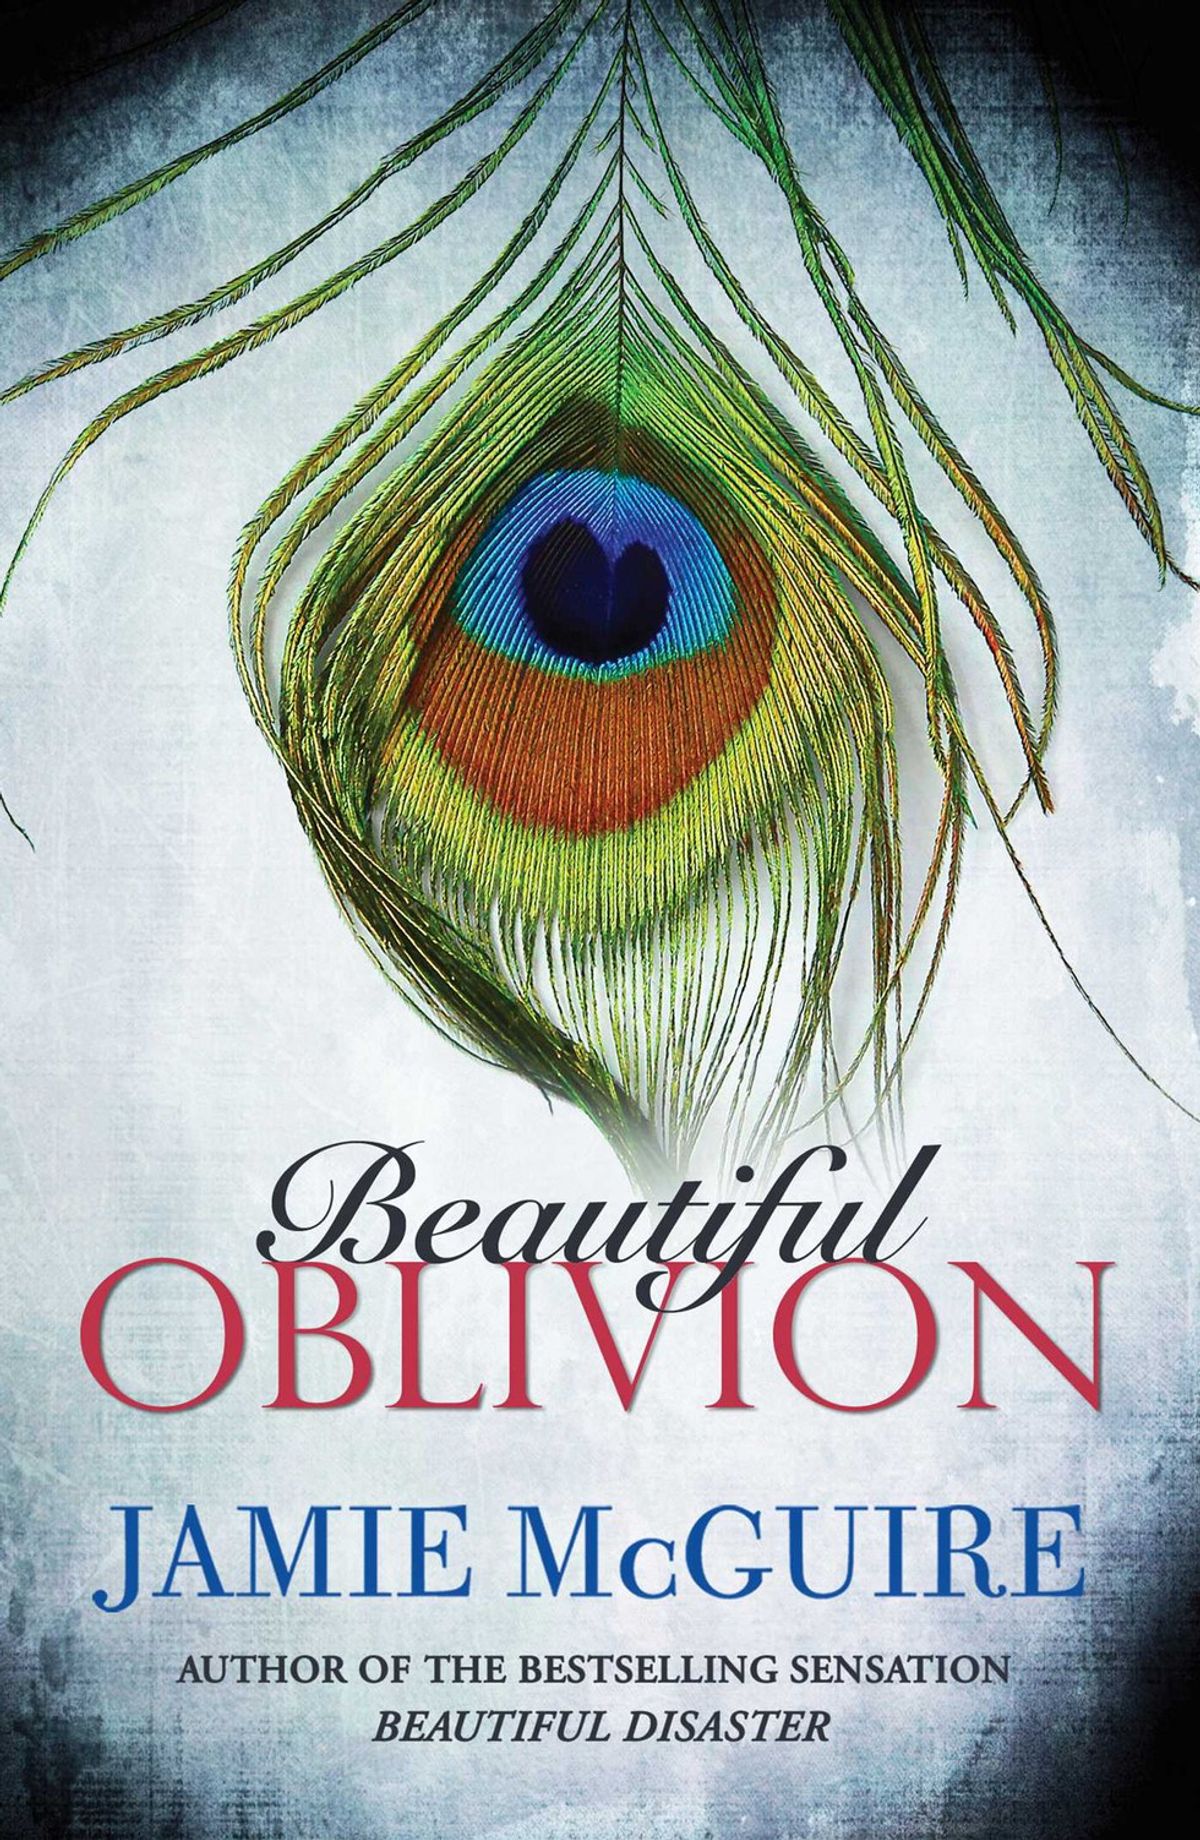 "Beautiful Oblivion" Book Review